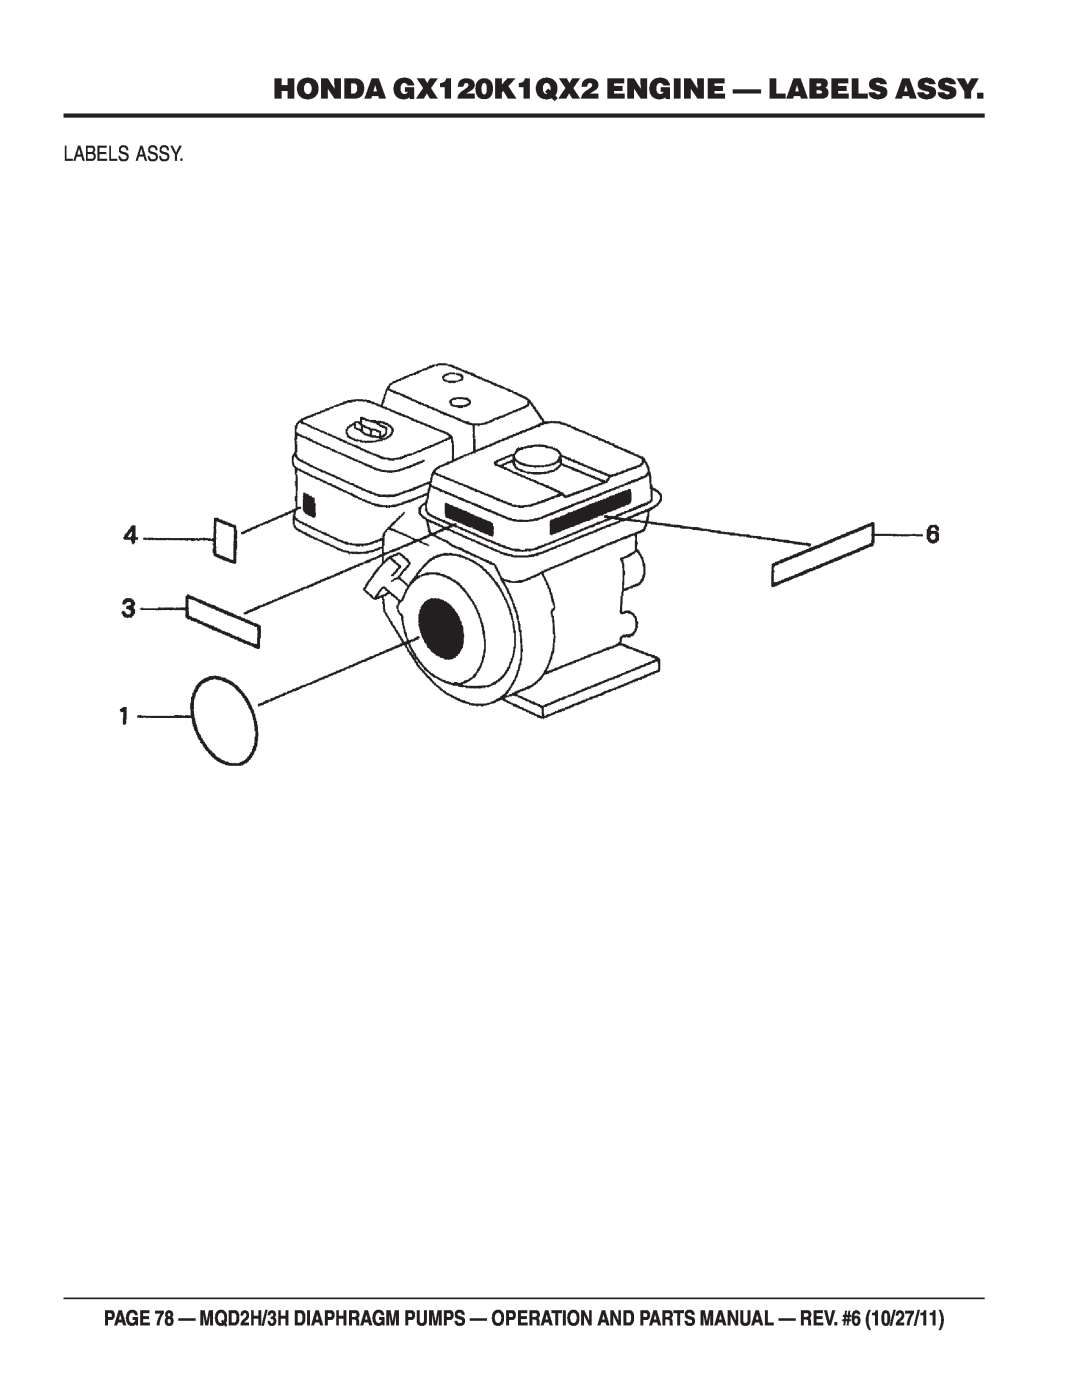 Multiquip MQD2H manual HONDA GX120K1QX2 ENGINE - LABELS ASSY, Labels Assy 